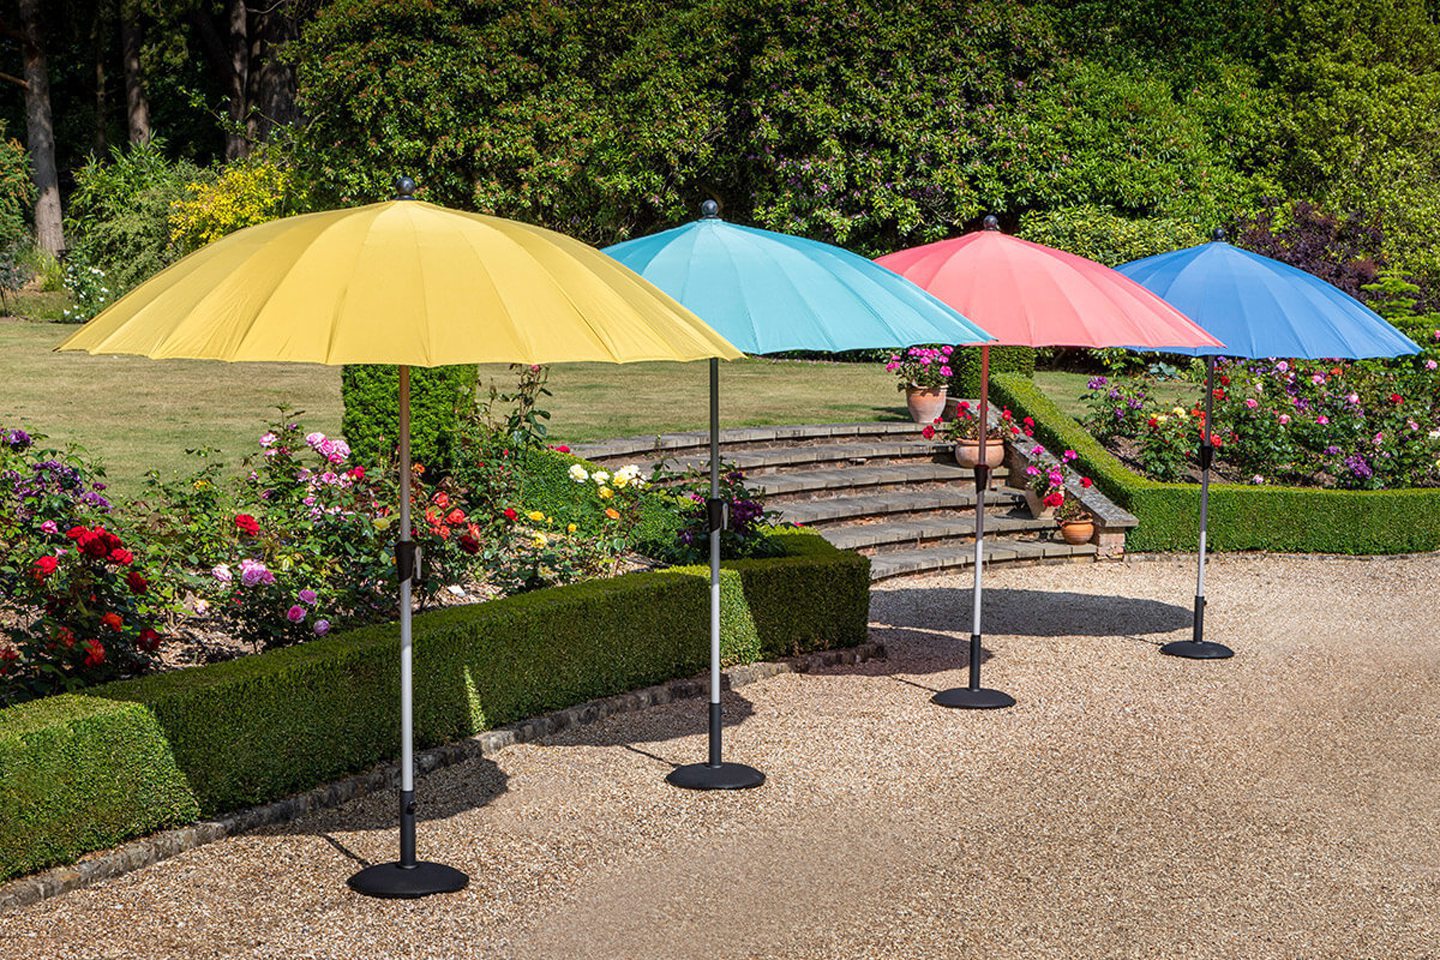 Colourful parasols